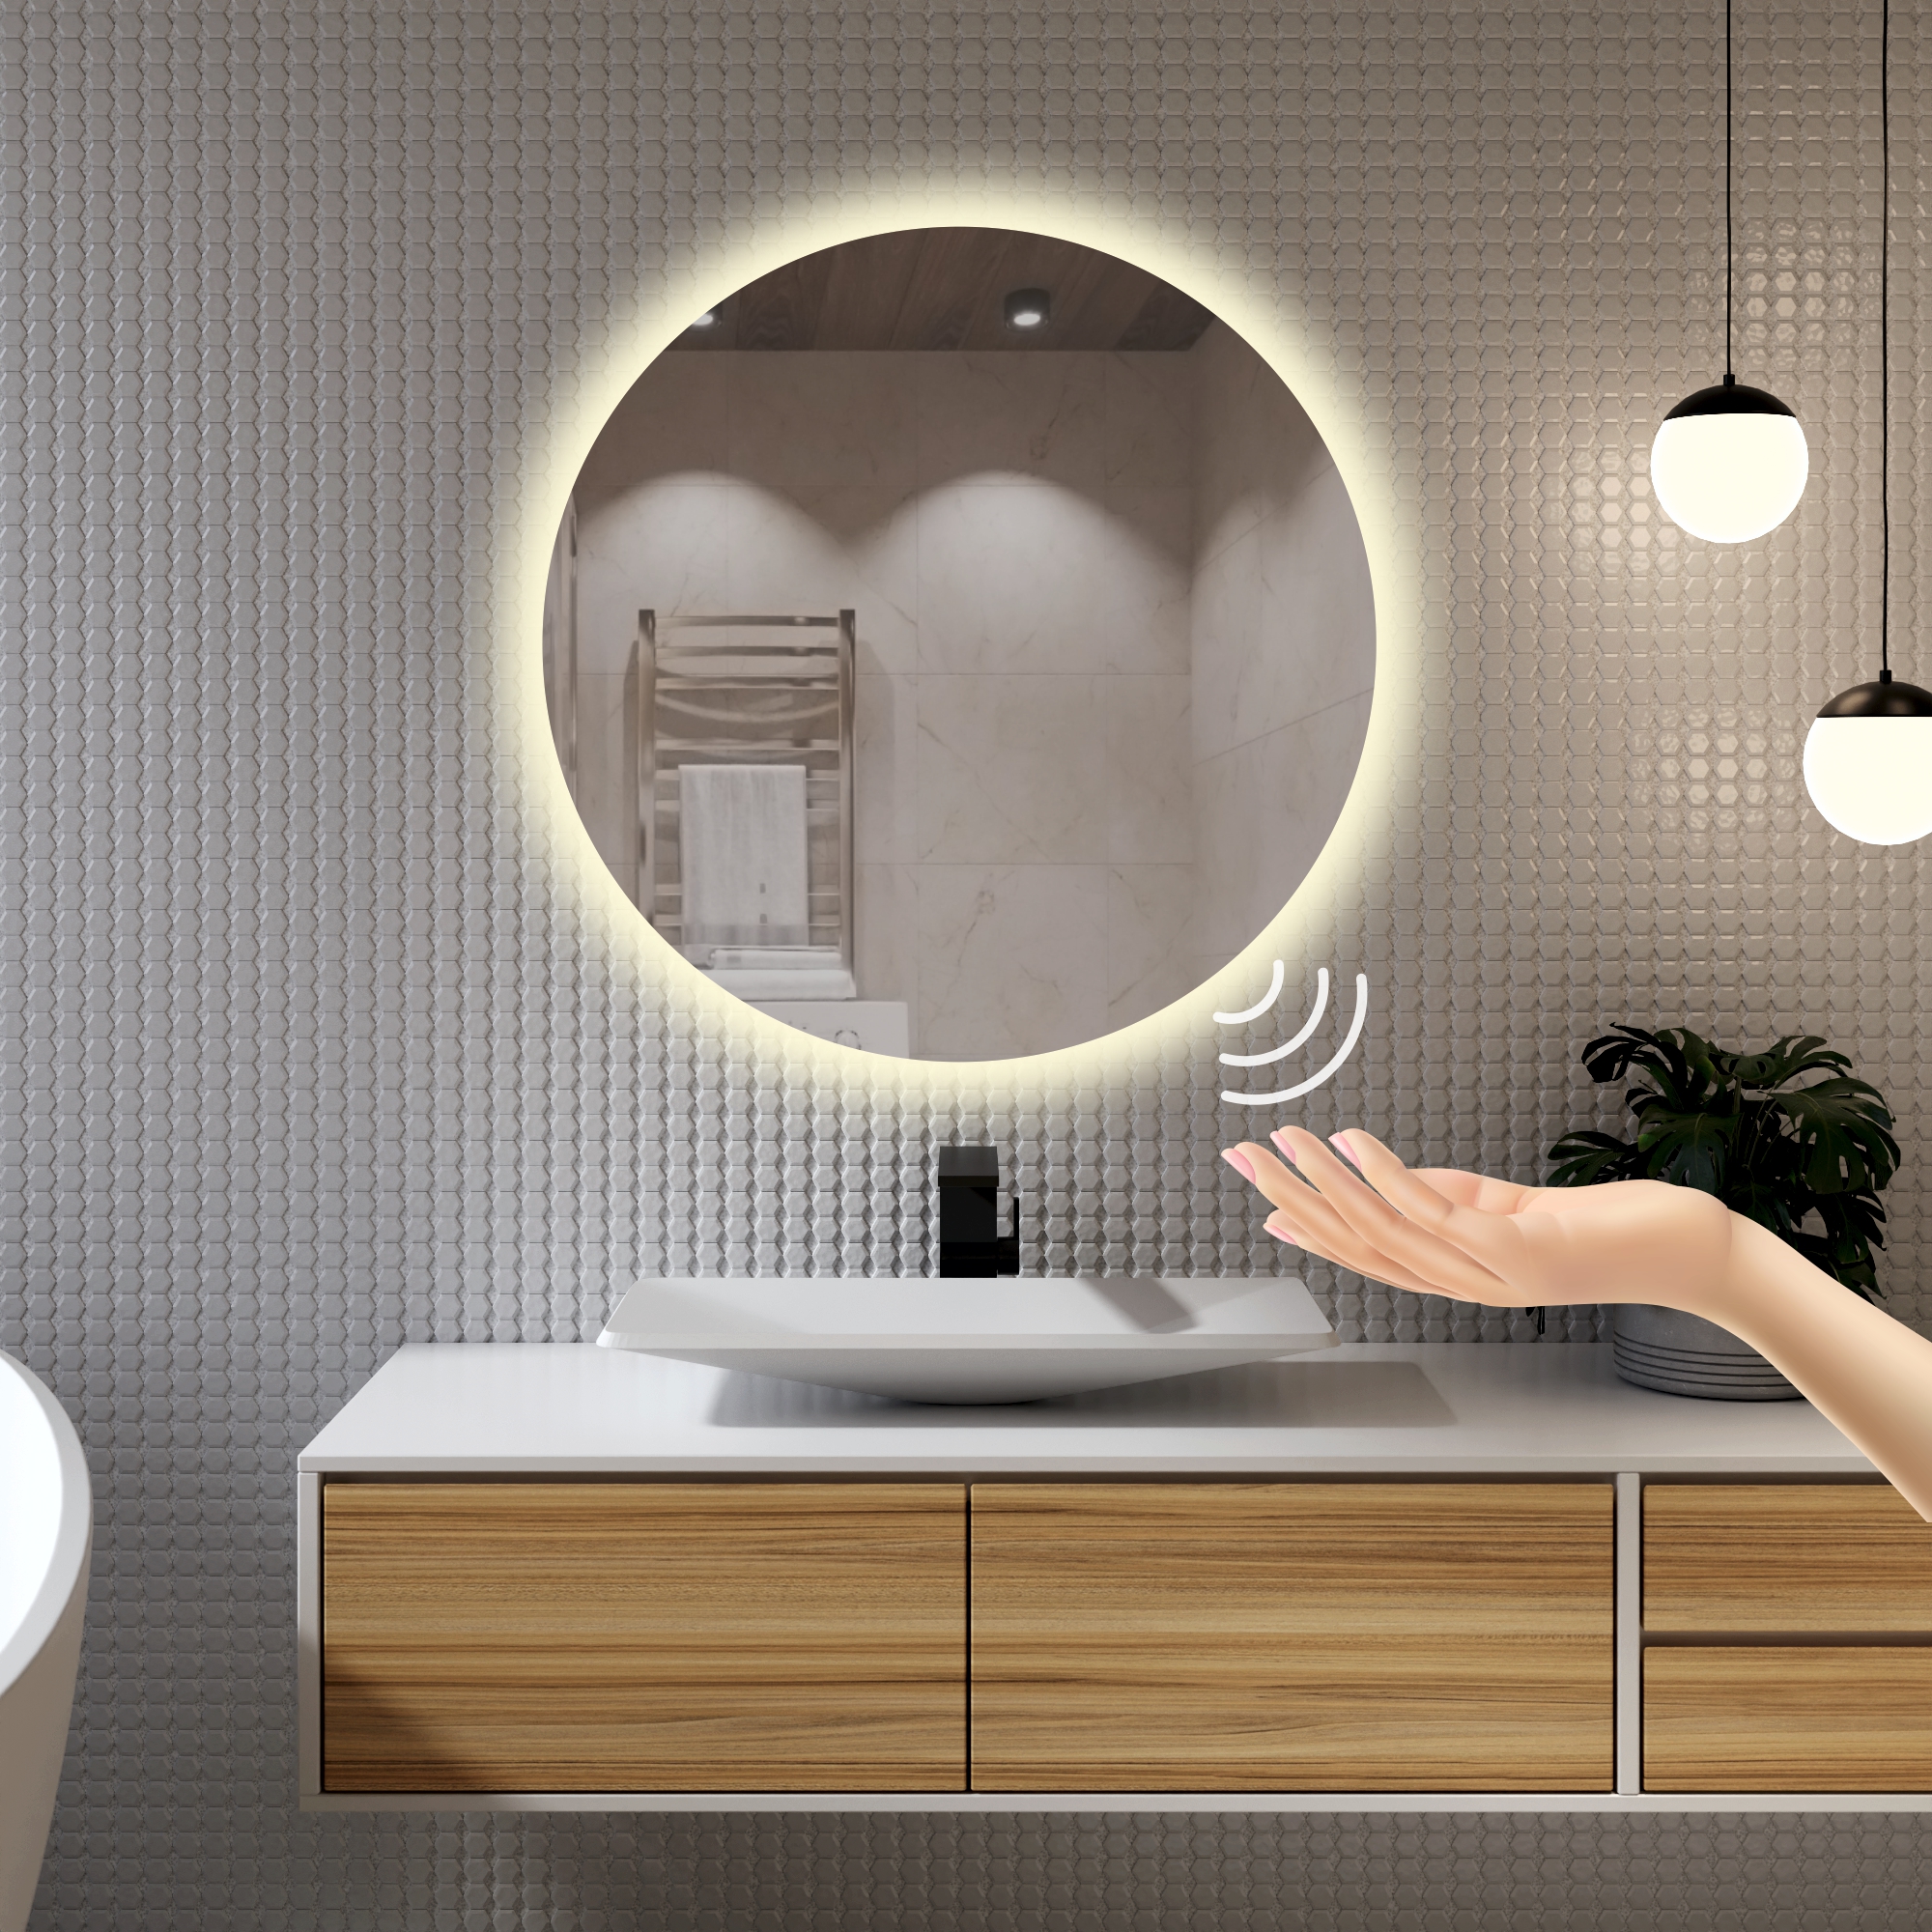 Зеркало для ванной Alfa Mirrors с дневной подсветкой 4200К круглое 60см, арт. Na-6Vzd зеркало с подсветкой настенное круглое silver mirrors fantom 77 см с bluetooth